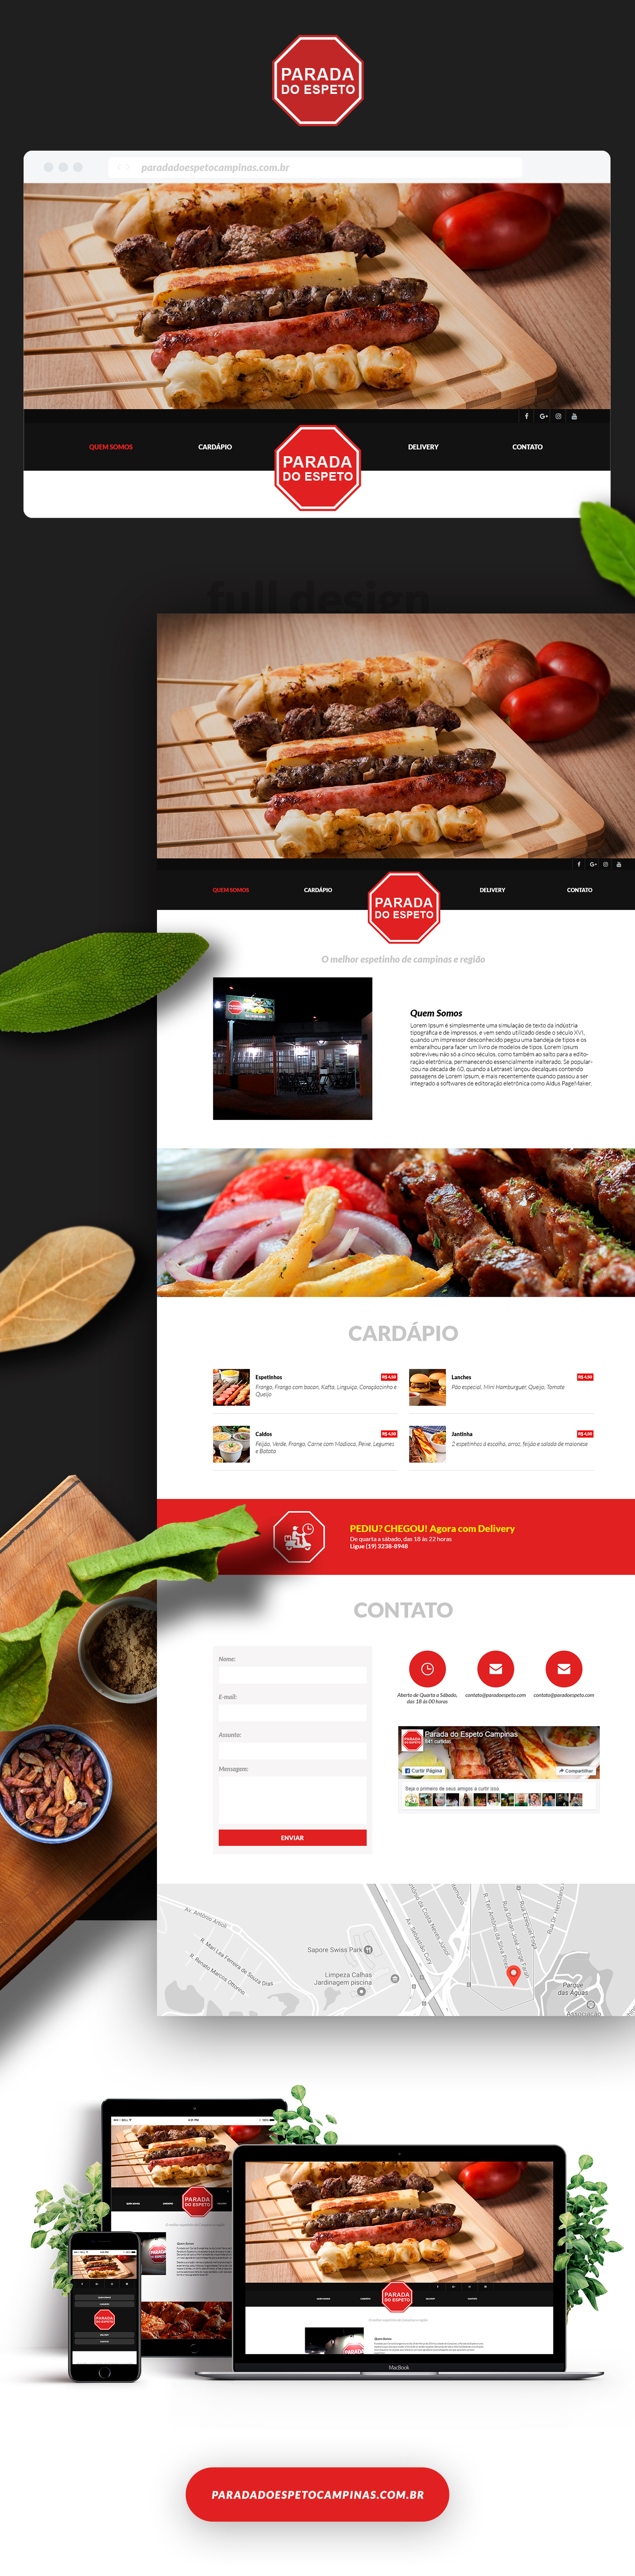 Website restaurant barbecue Layout Food  wordpress parada espeto campinas